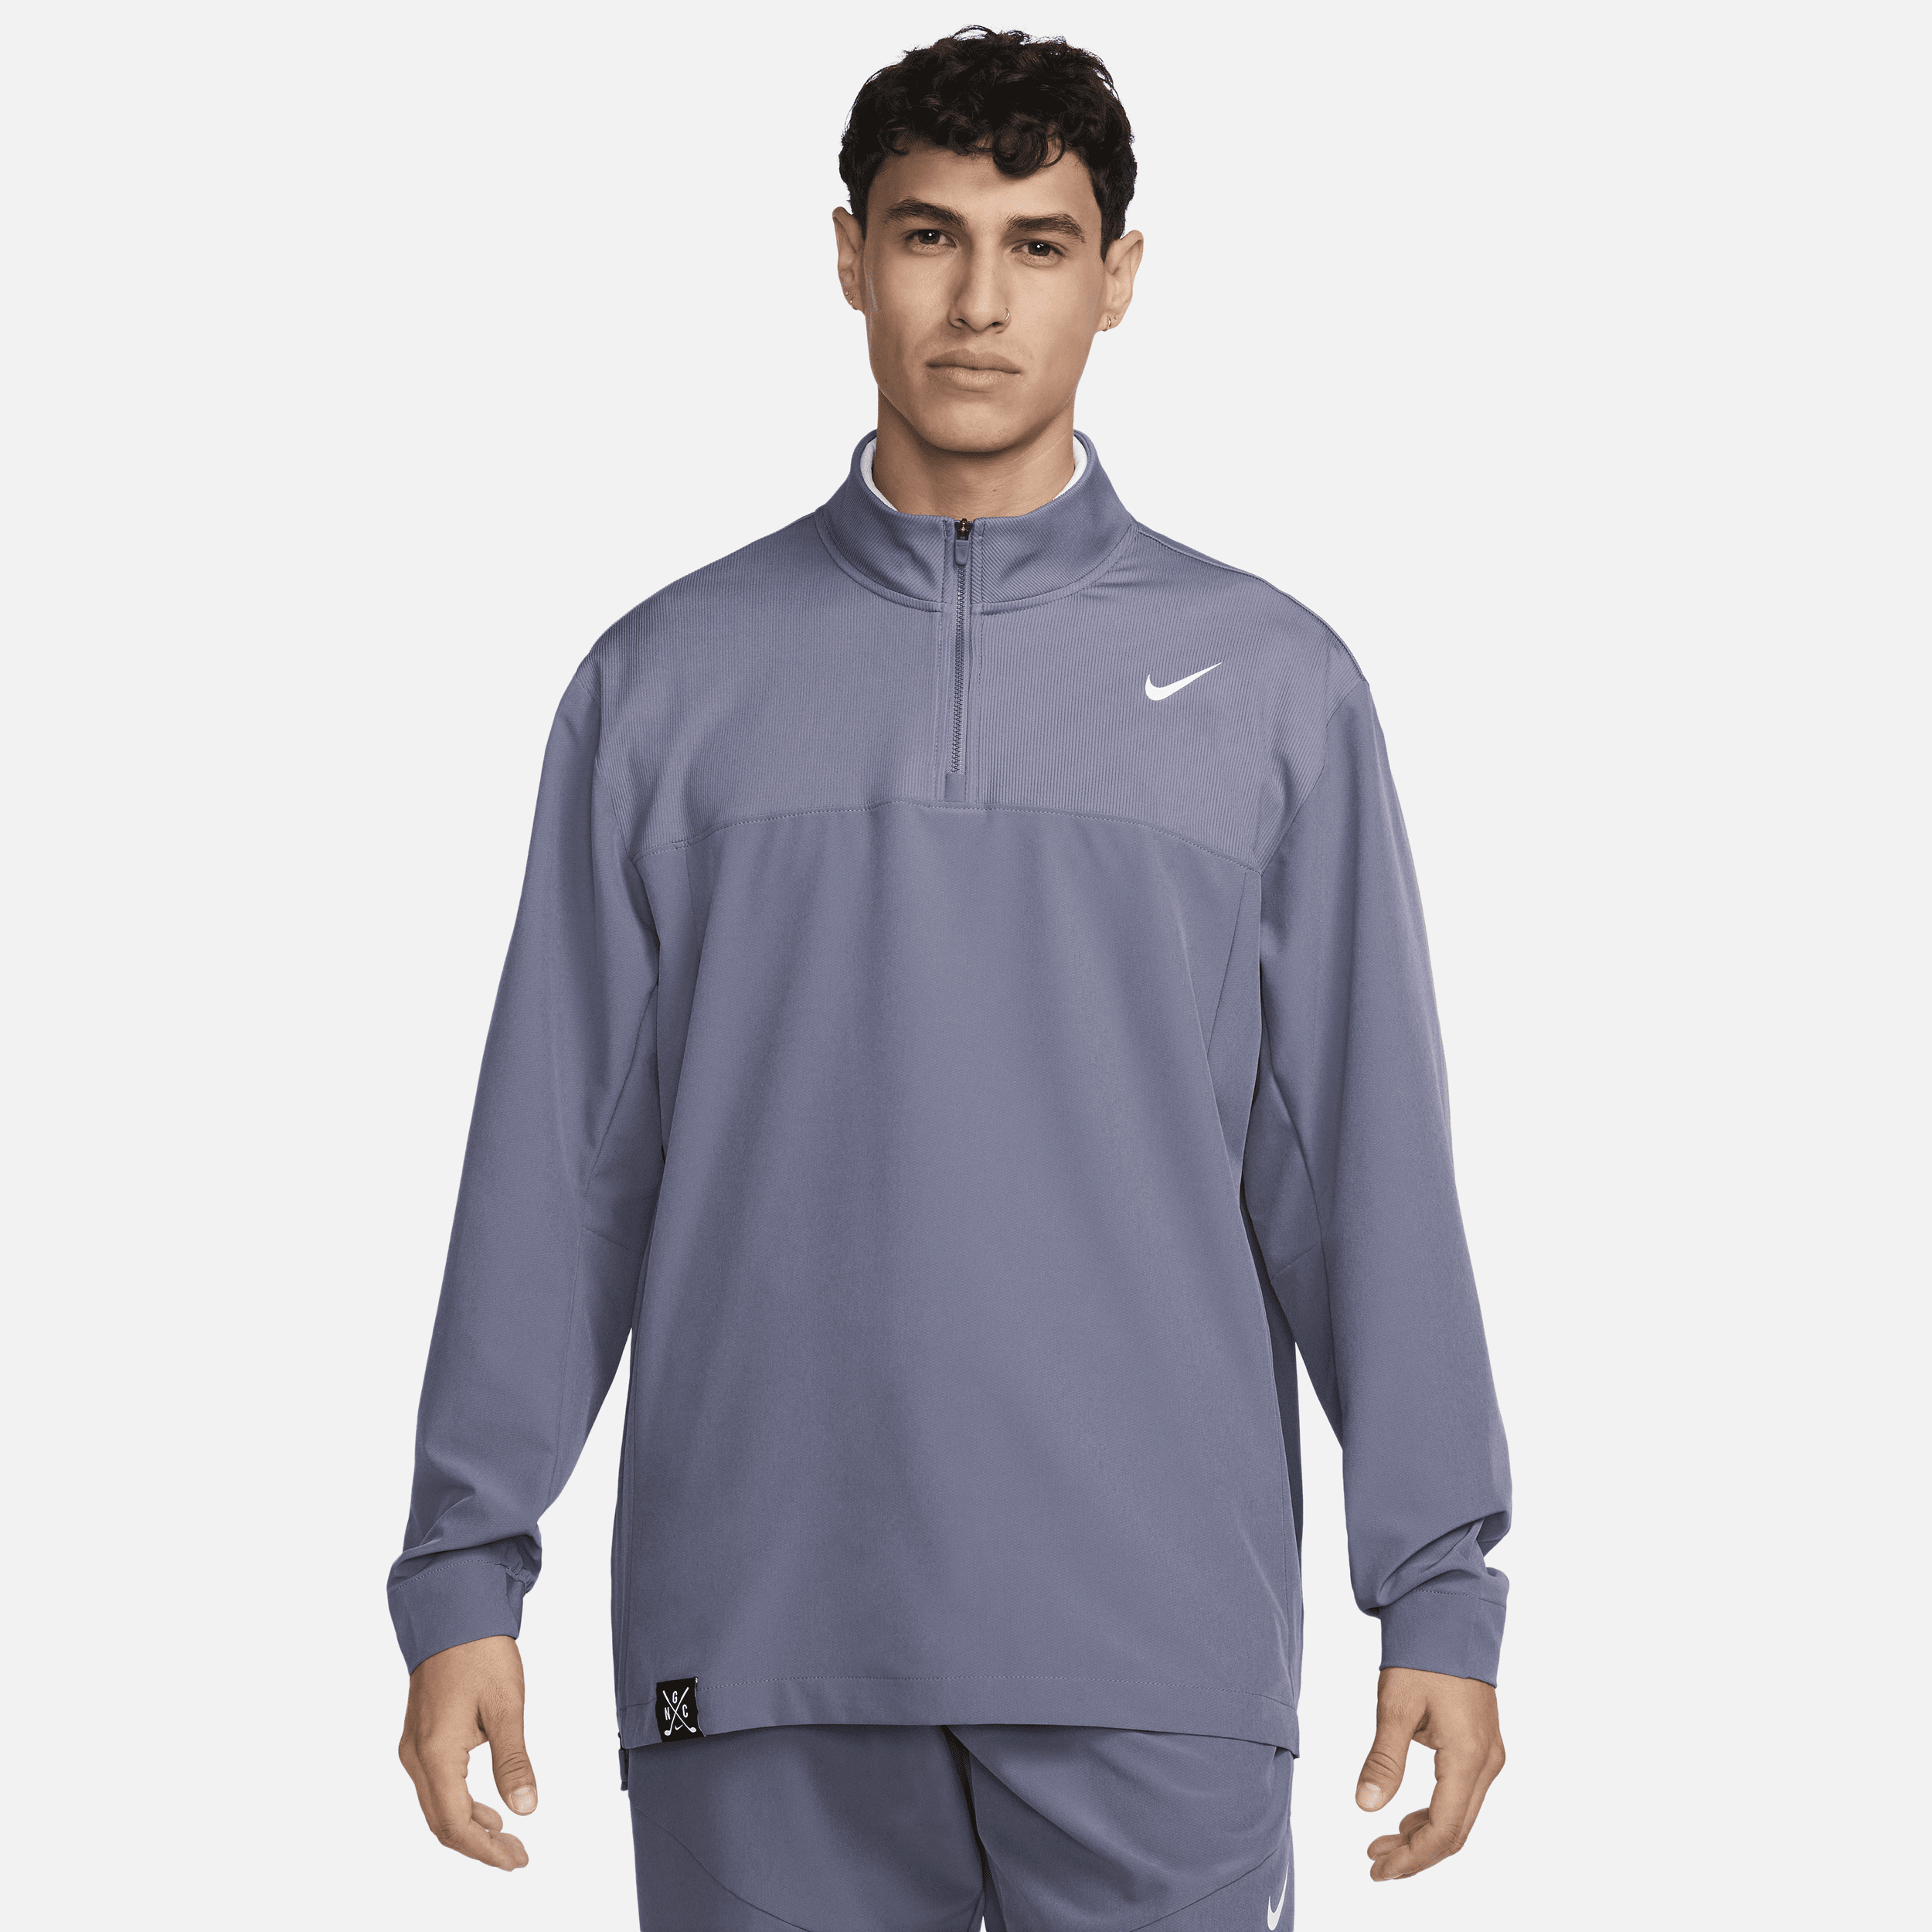 Nike Golf Club Dri-FIT-golfjakke til mænd - grå